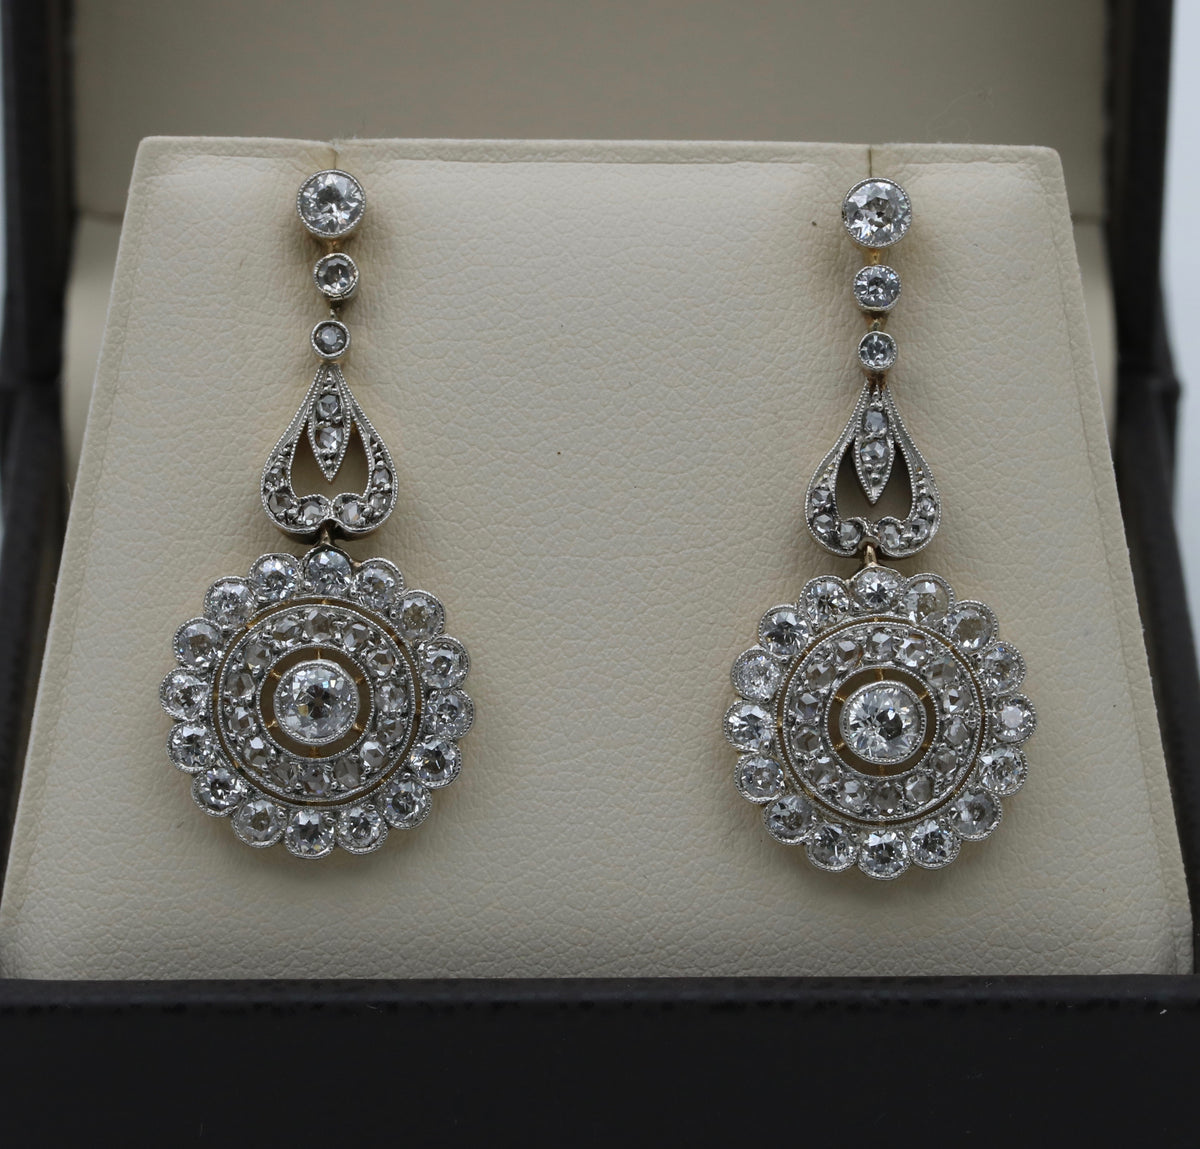 Edwardian 3.3 Carat Diamond and 18K Gold Drop Earrings